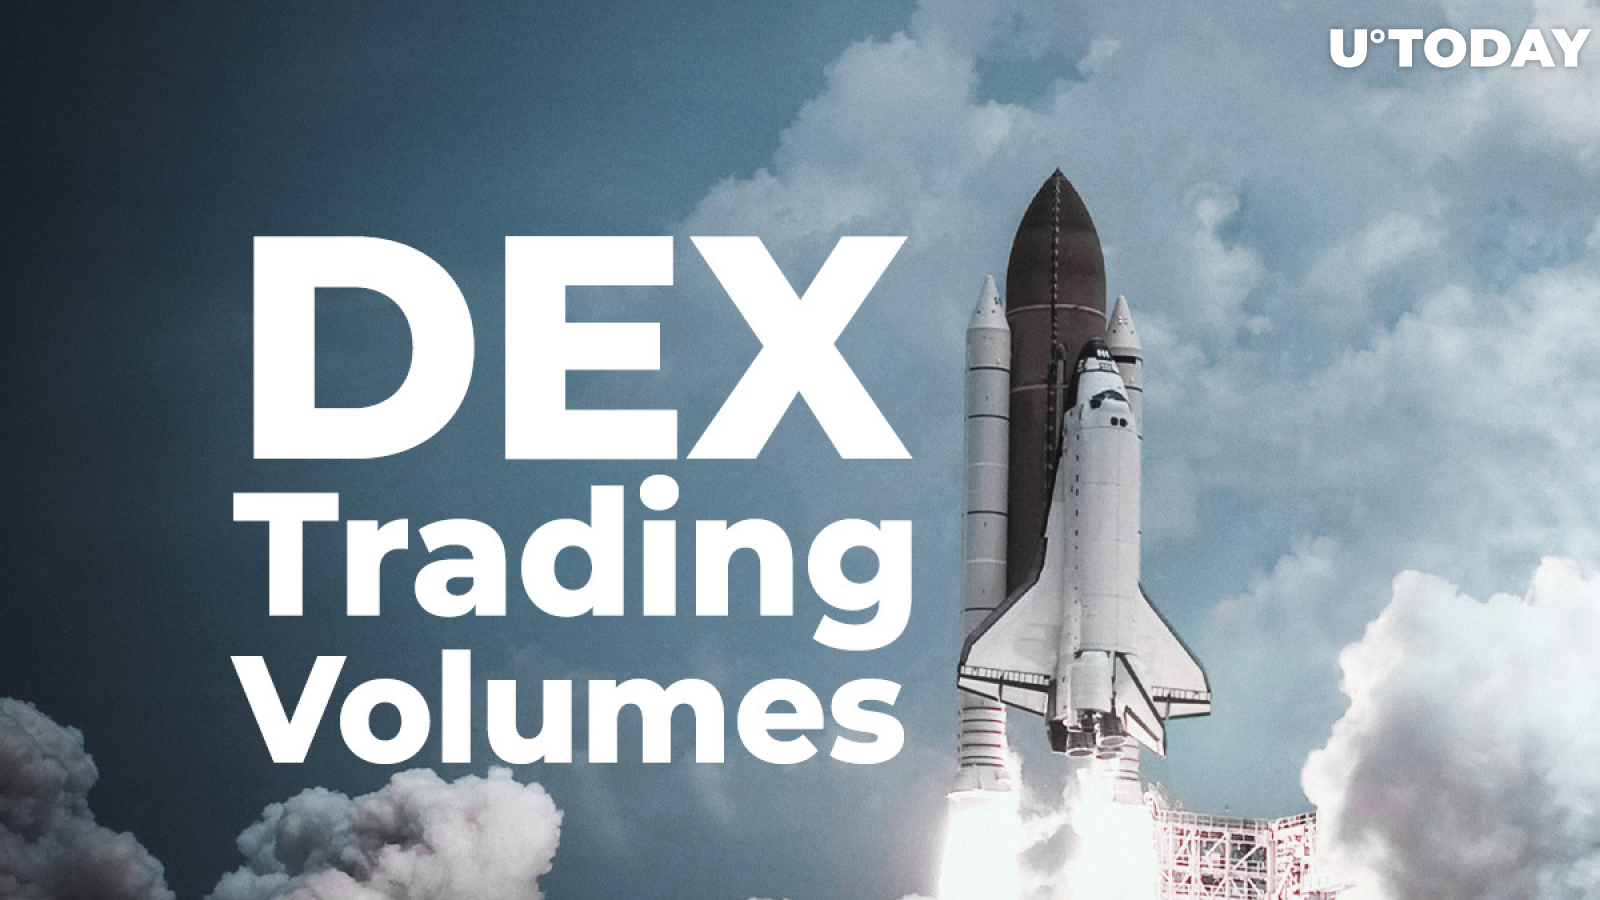 DEX Trading Volumes Explosively Surpassed CEX in September: CoinGecko Report